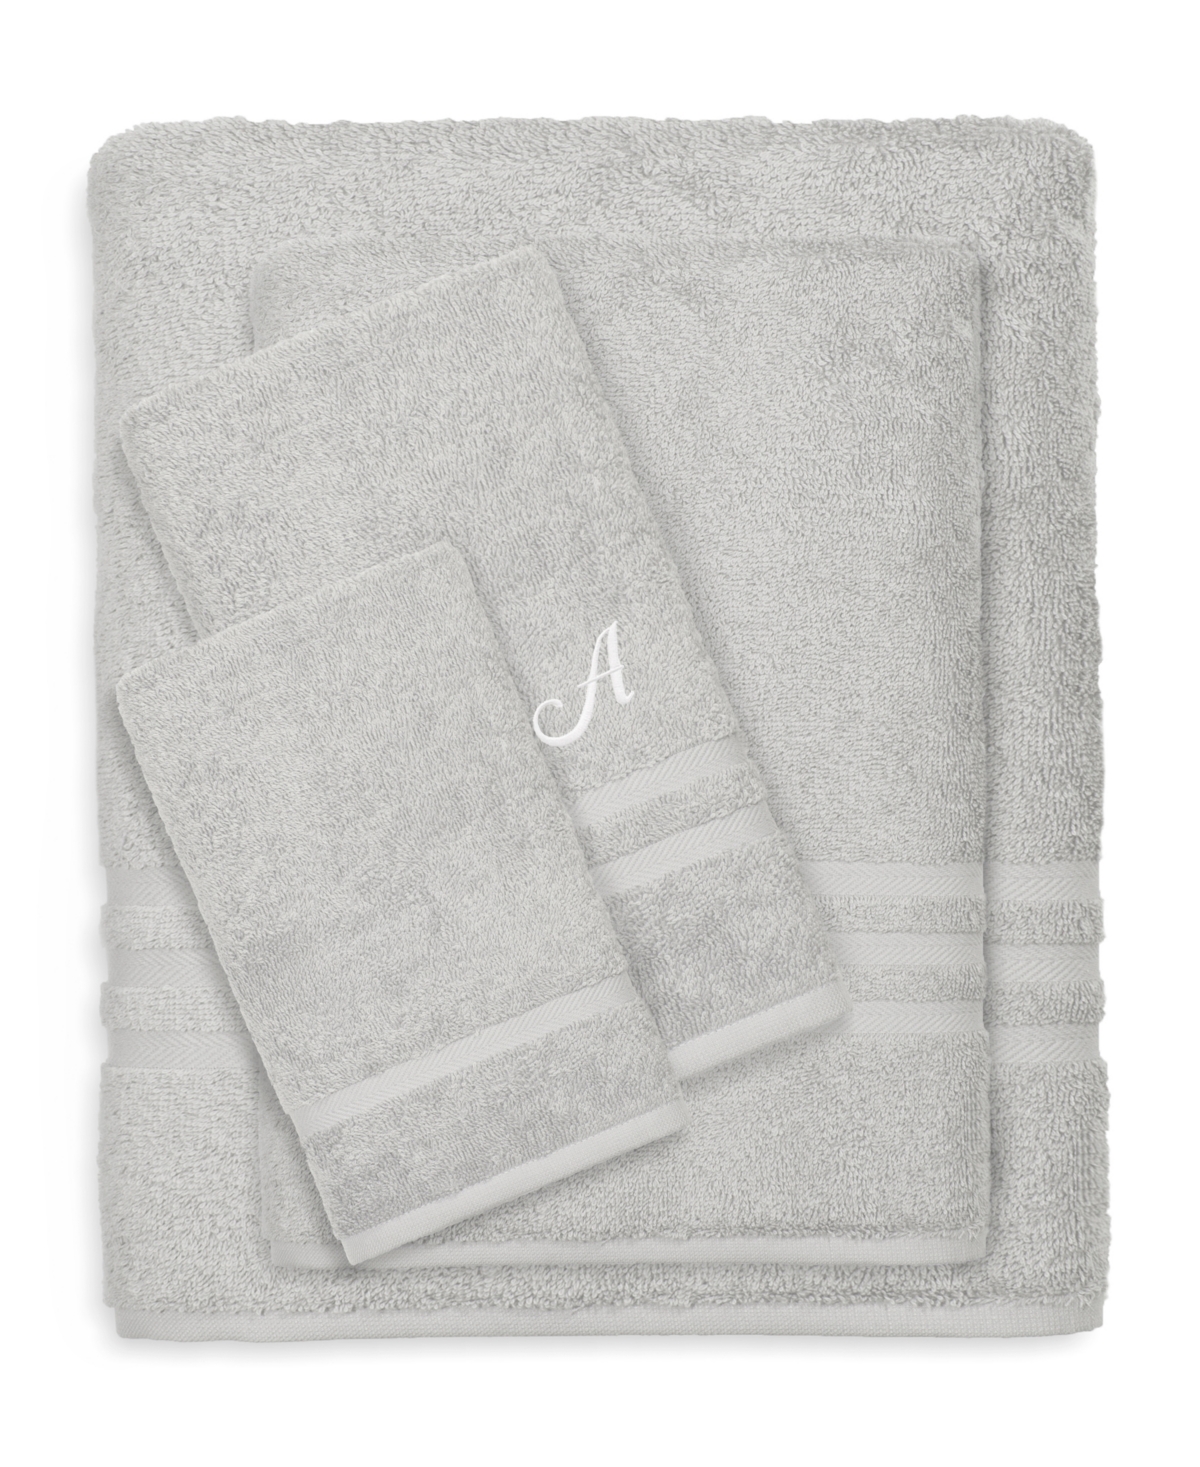 Linum Home Textiles Turkish Cotton Personalized Denzi Towel Set, 4 Piece Bedding In Gray